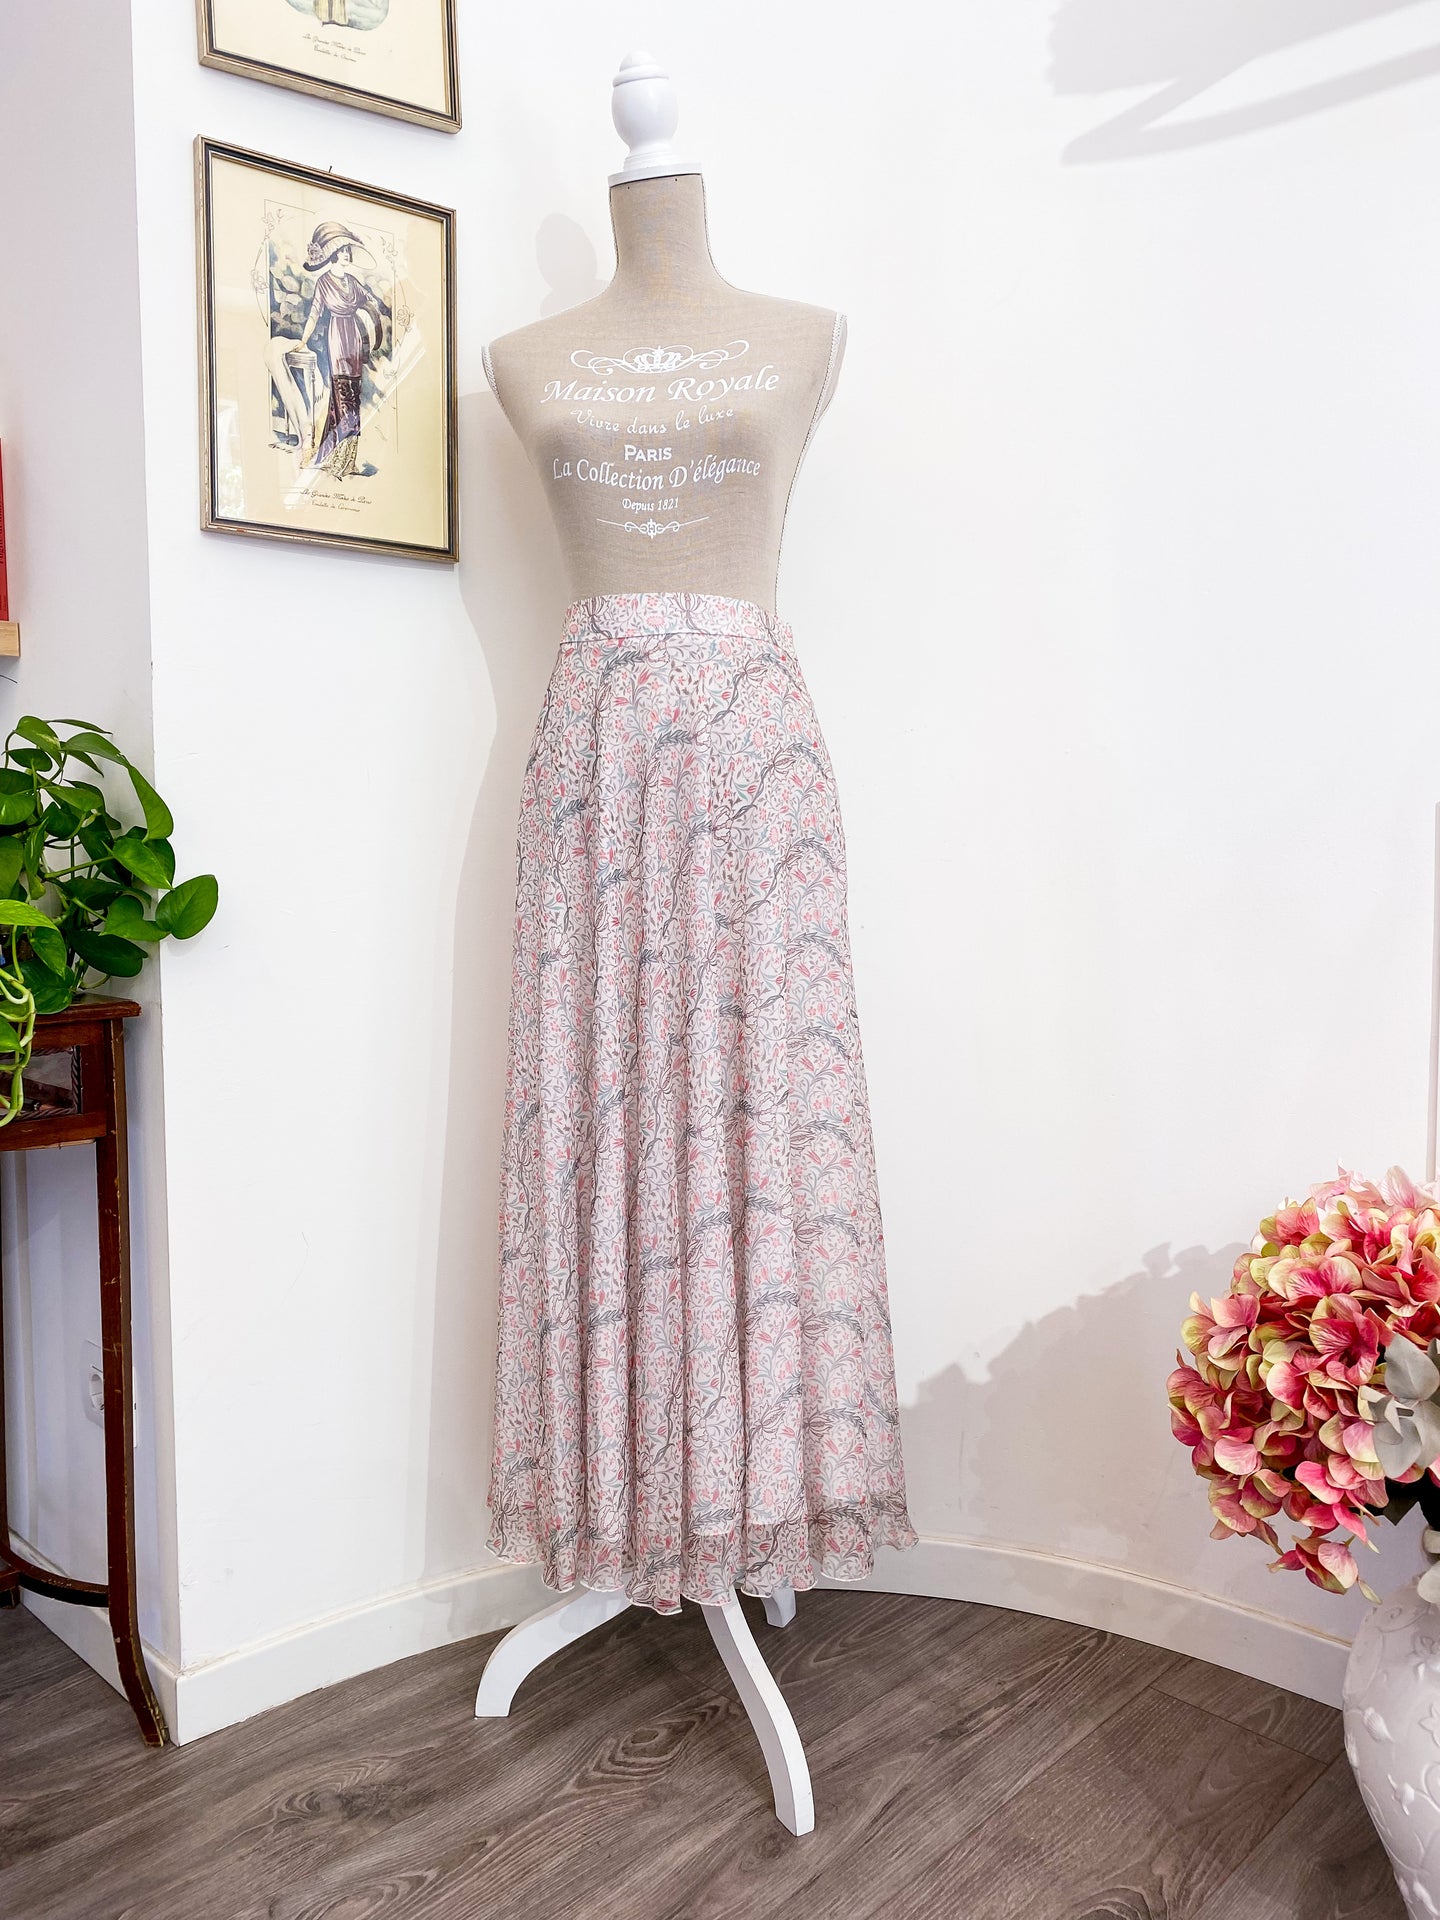 Petal skirt - Size 46